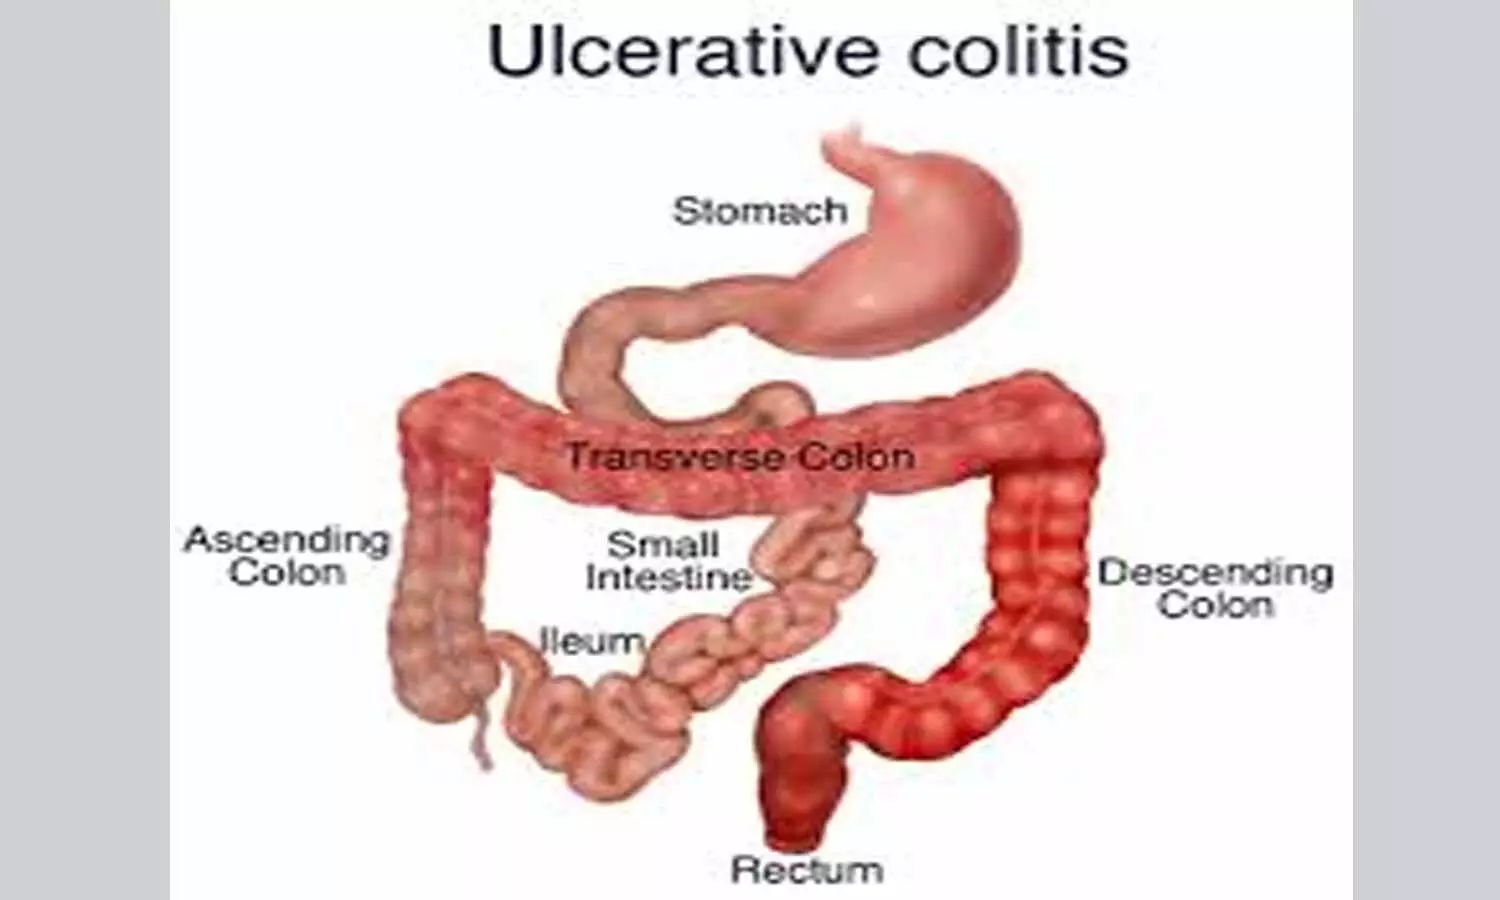 Intestinal ultrasound preferred option to monitor ulcerative colitis course: Study